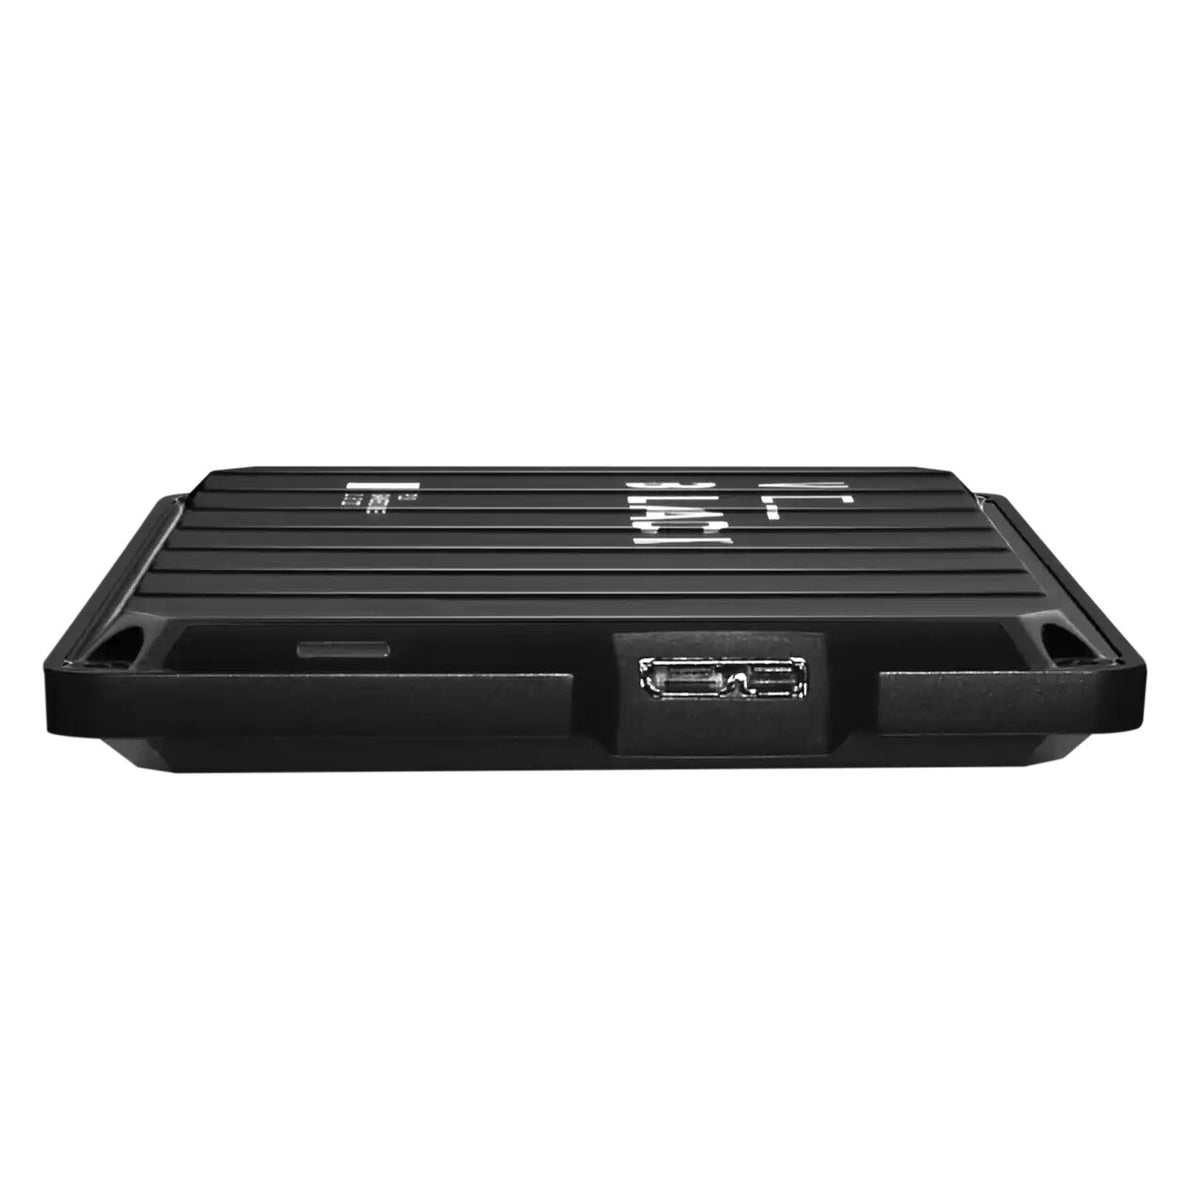 Western Digital WD_BLACK P10 Game Drive - External Hard Drive in Black - 2 TB